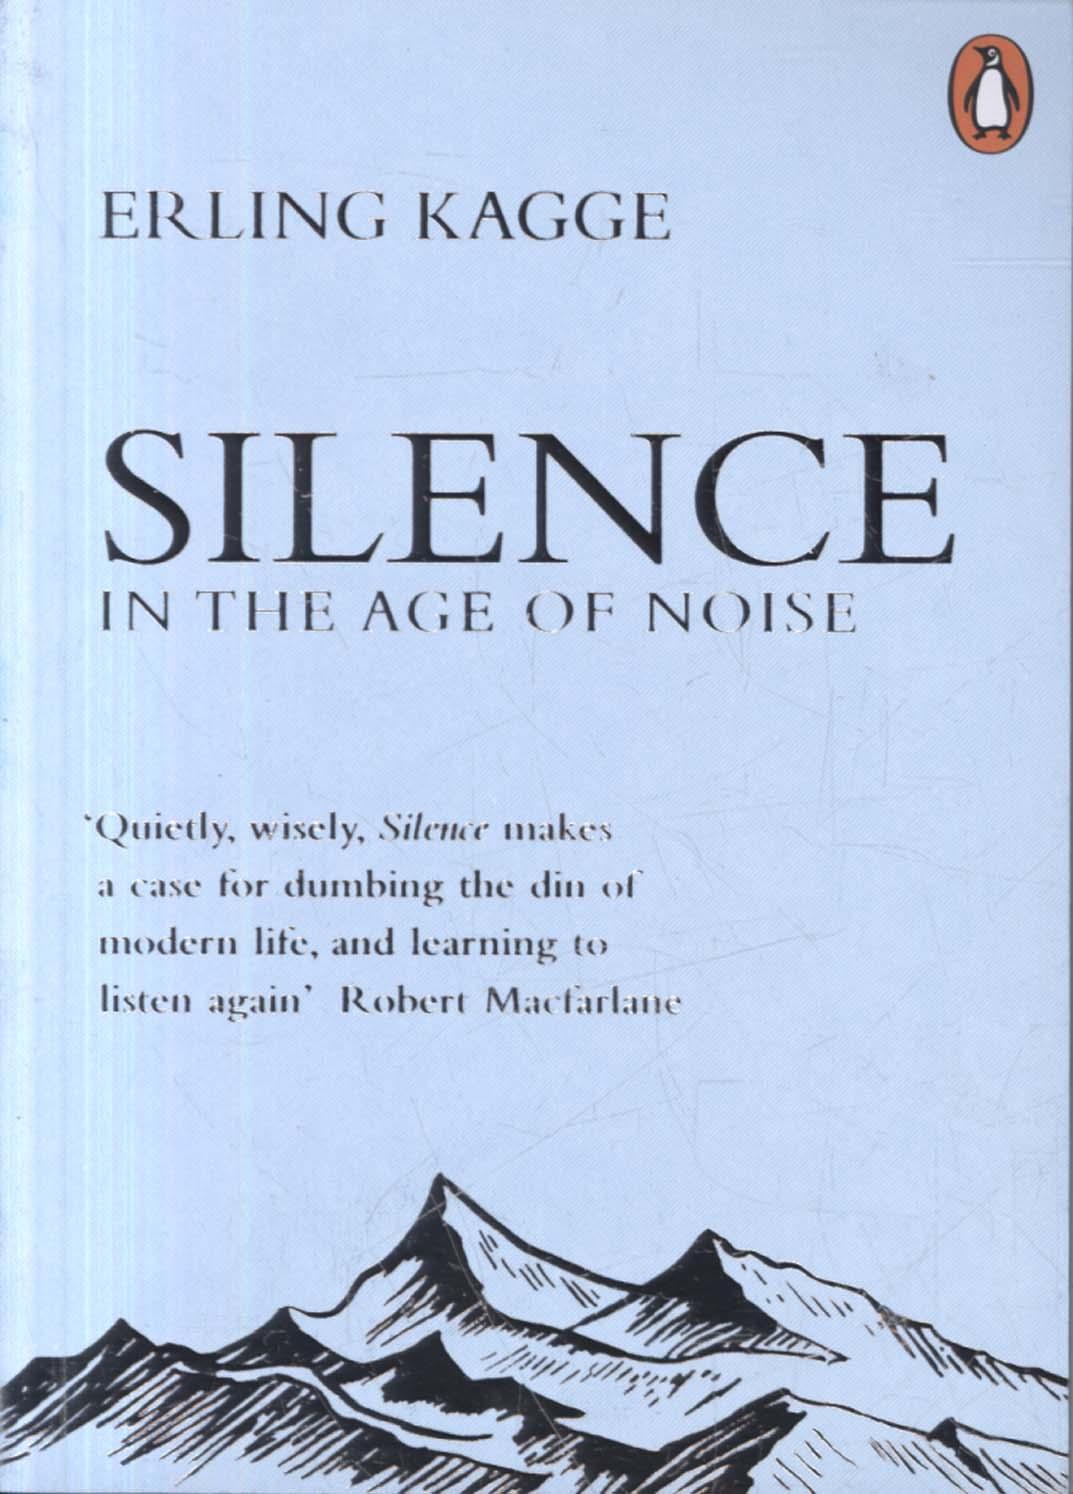 Silence - Erling Kagge